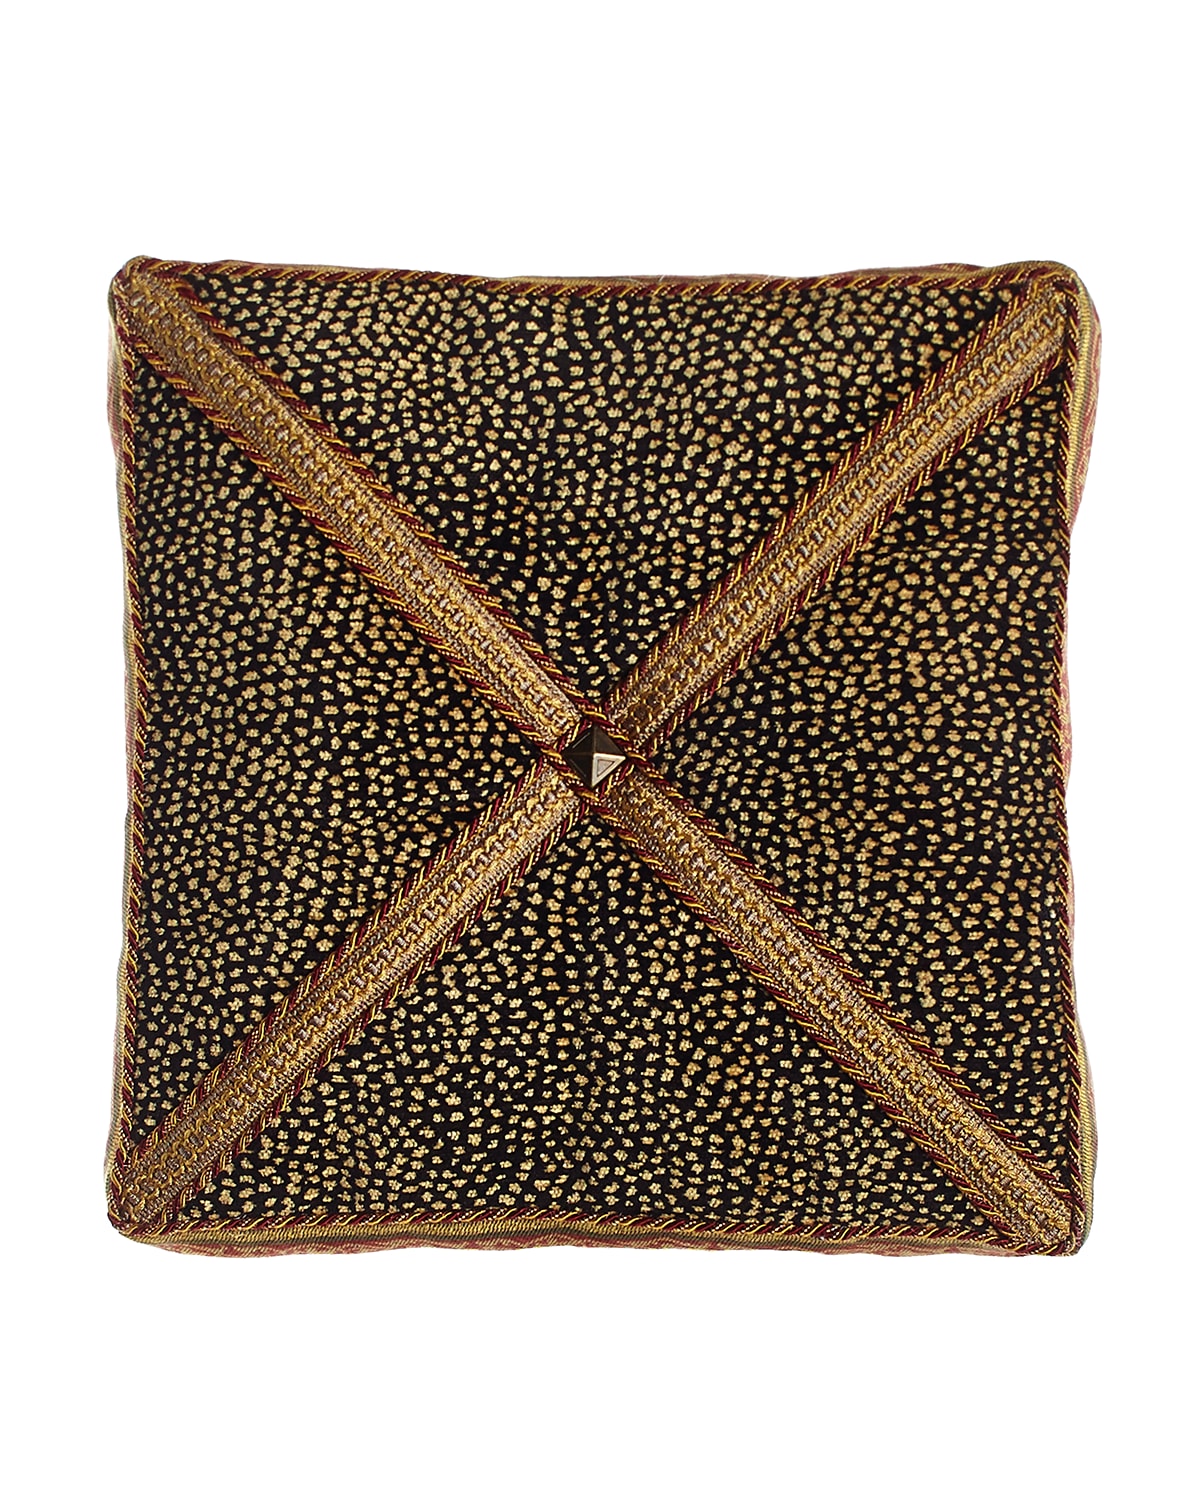 Image Sweet Dreams Exotica Animal-Patterned Velvet Box Pillow, 14"Sq.